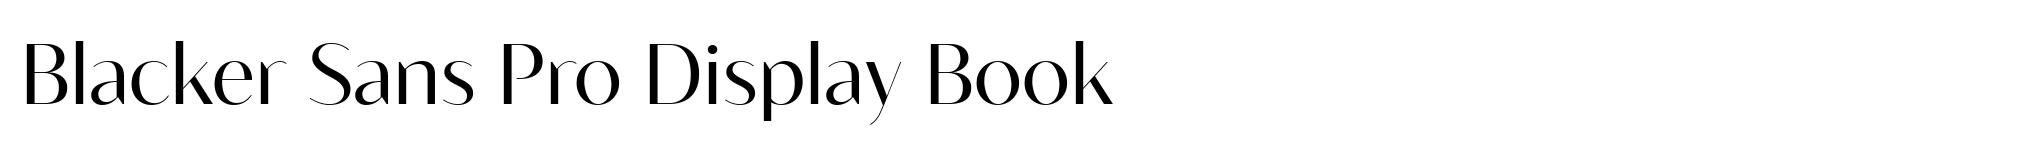 Blacker Sans Pro Display Book image